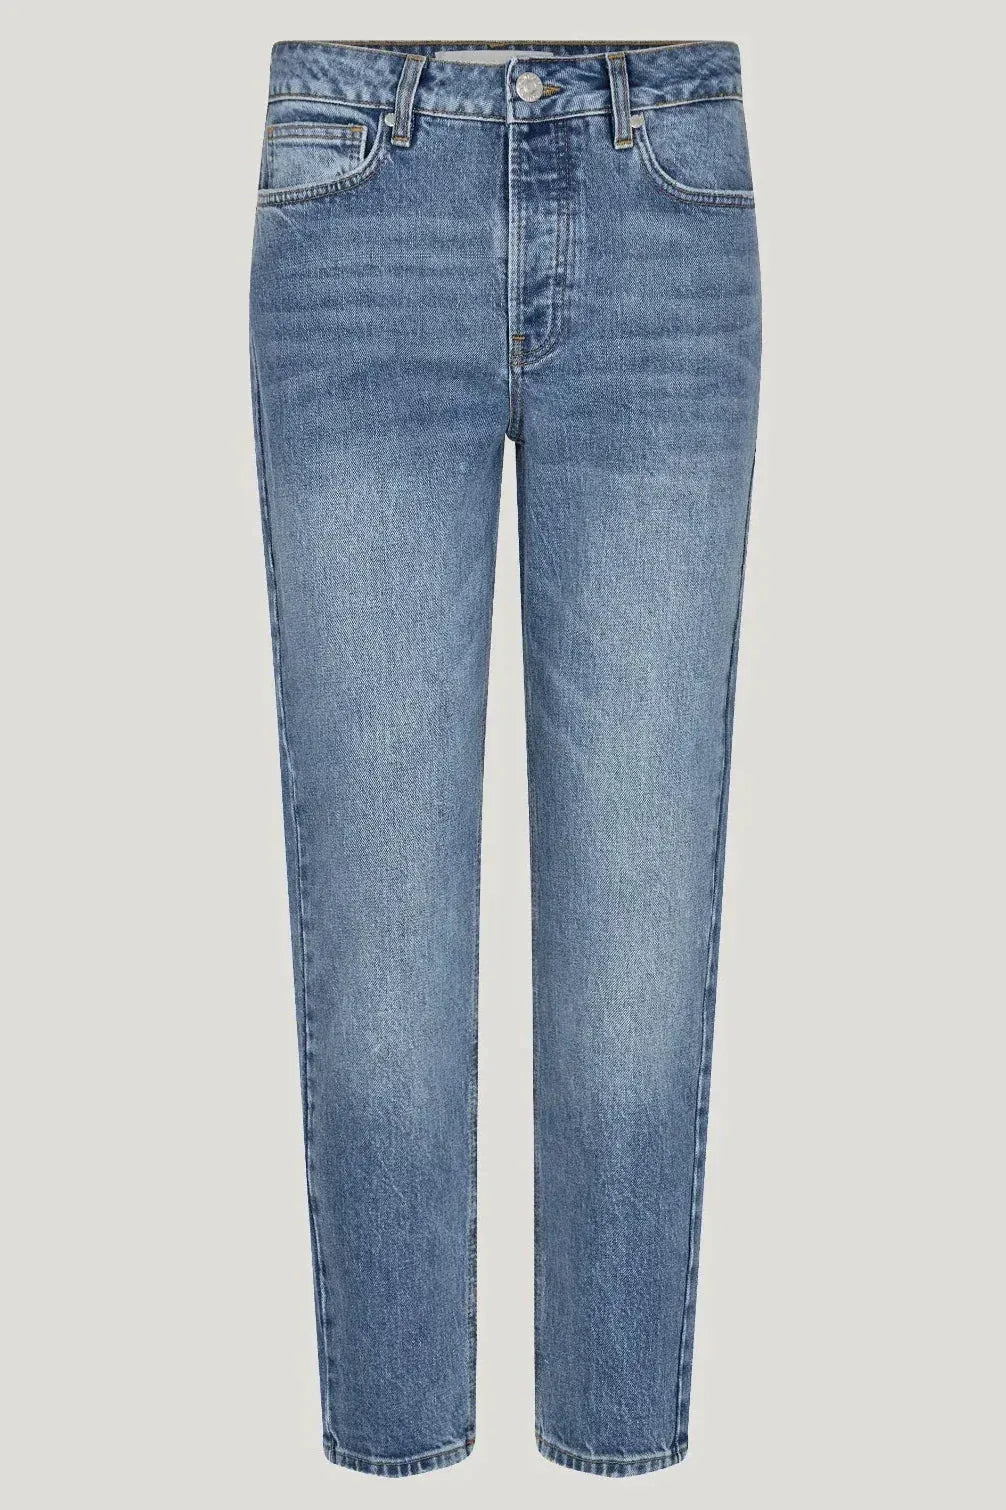 Jeans | Tomorrow Hepburn Jeans Wash Vancouver, denim blue